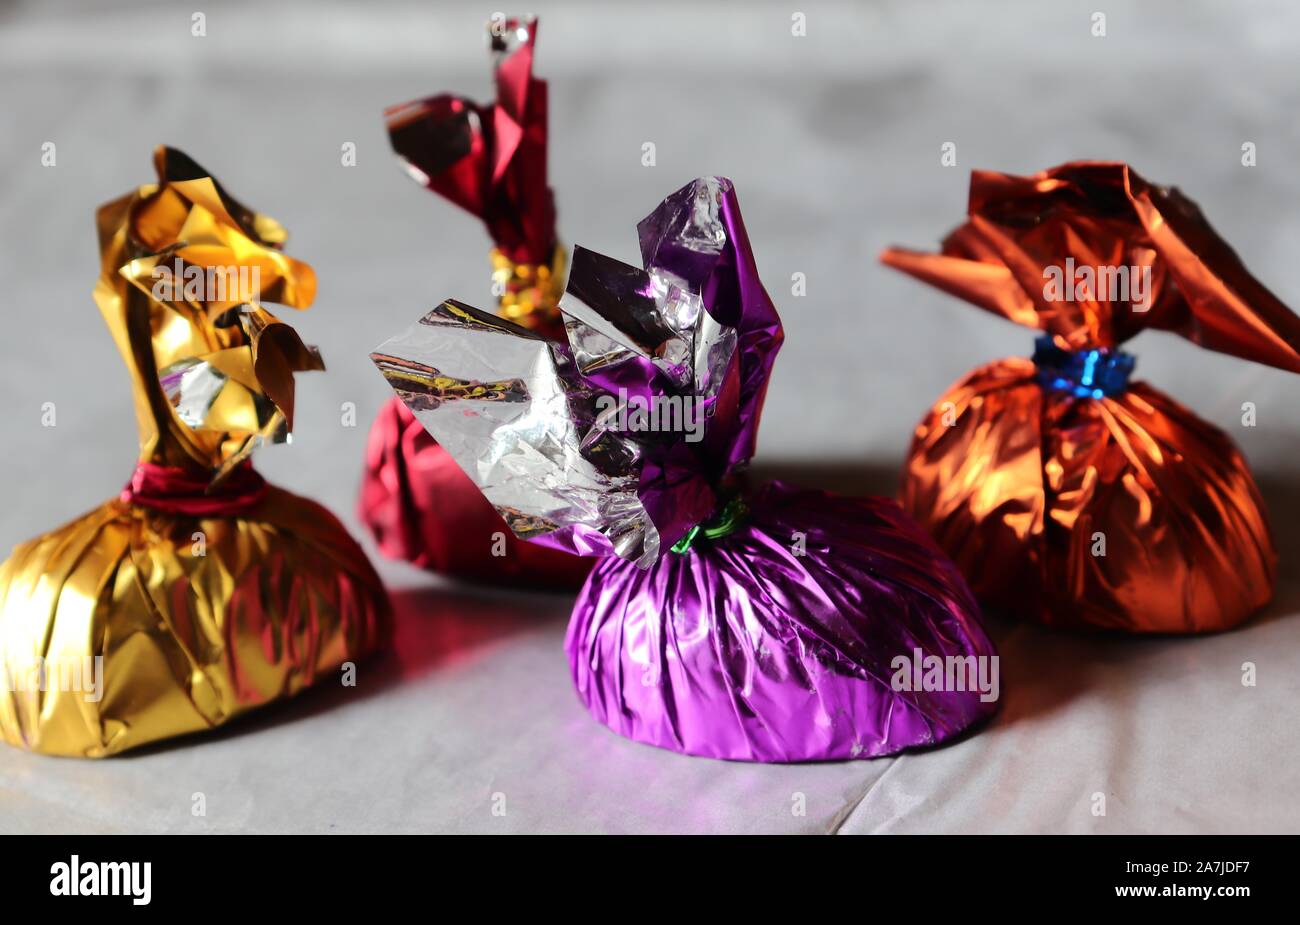 Close-up de surtido de chocolates en envoltorios coloridos Foto de stock